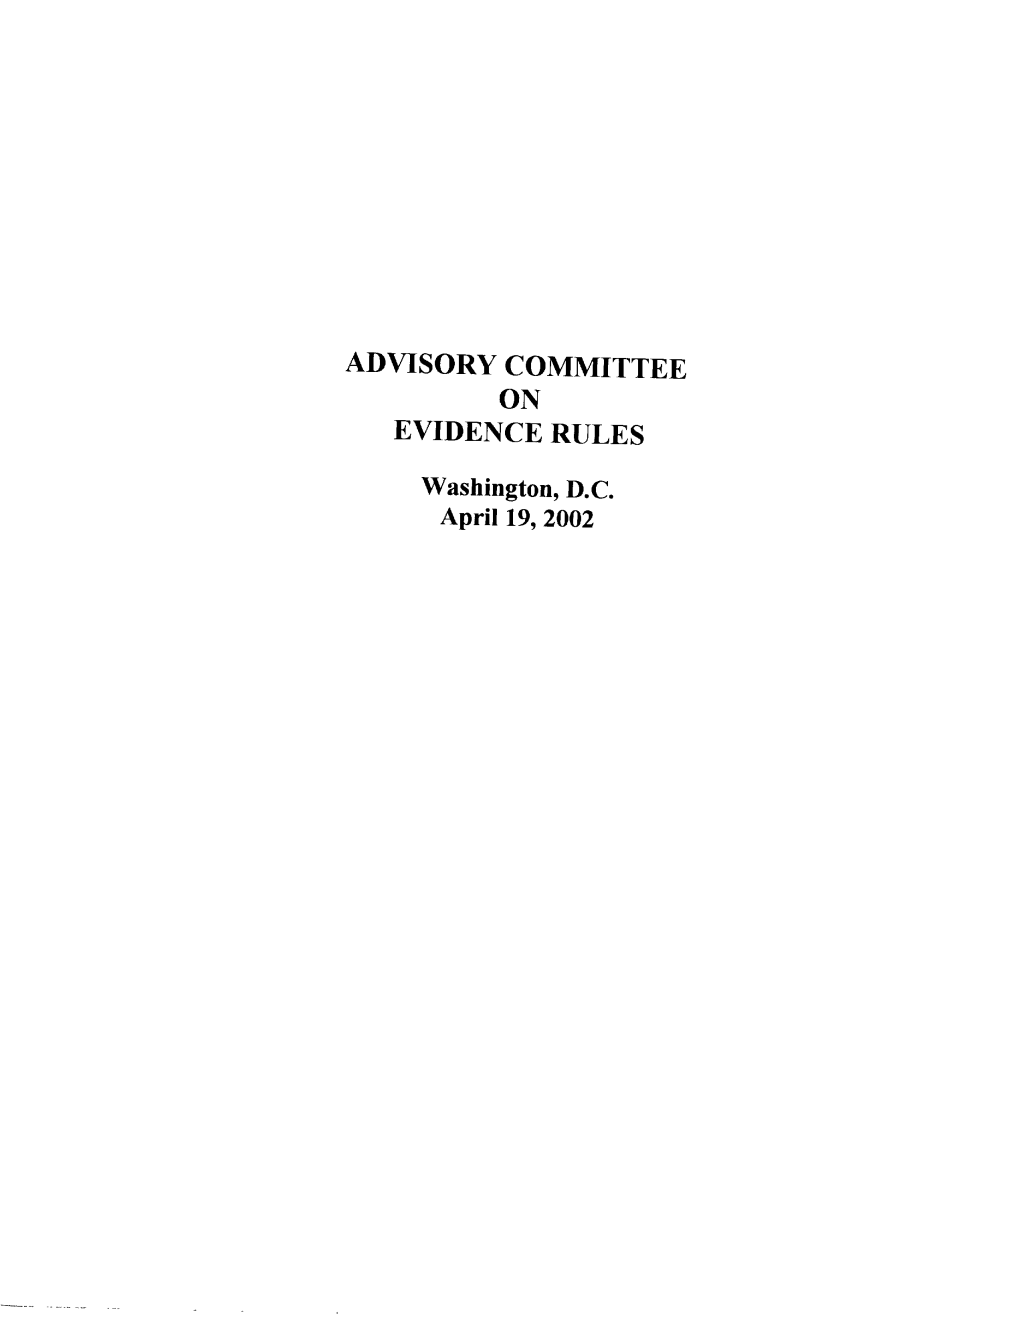 ADVISORY COMMITTEE on EVIDENCE RULES Washington, D.C. April 19, 2002